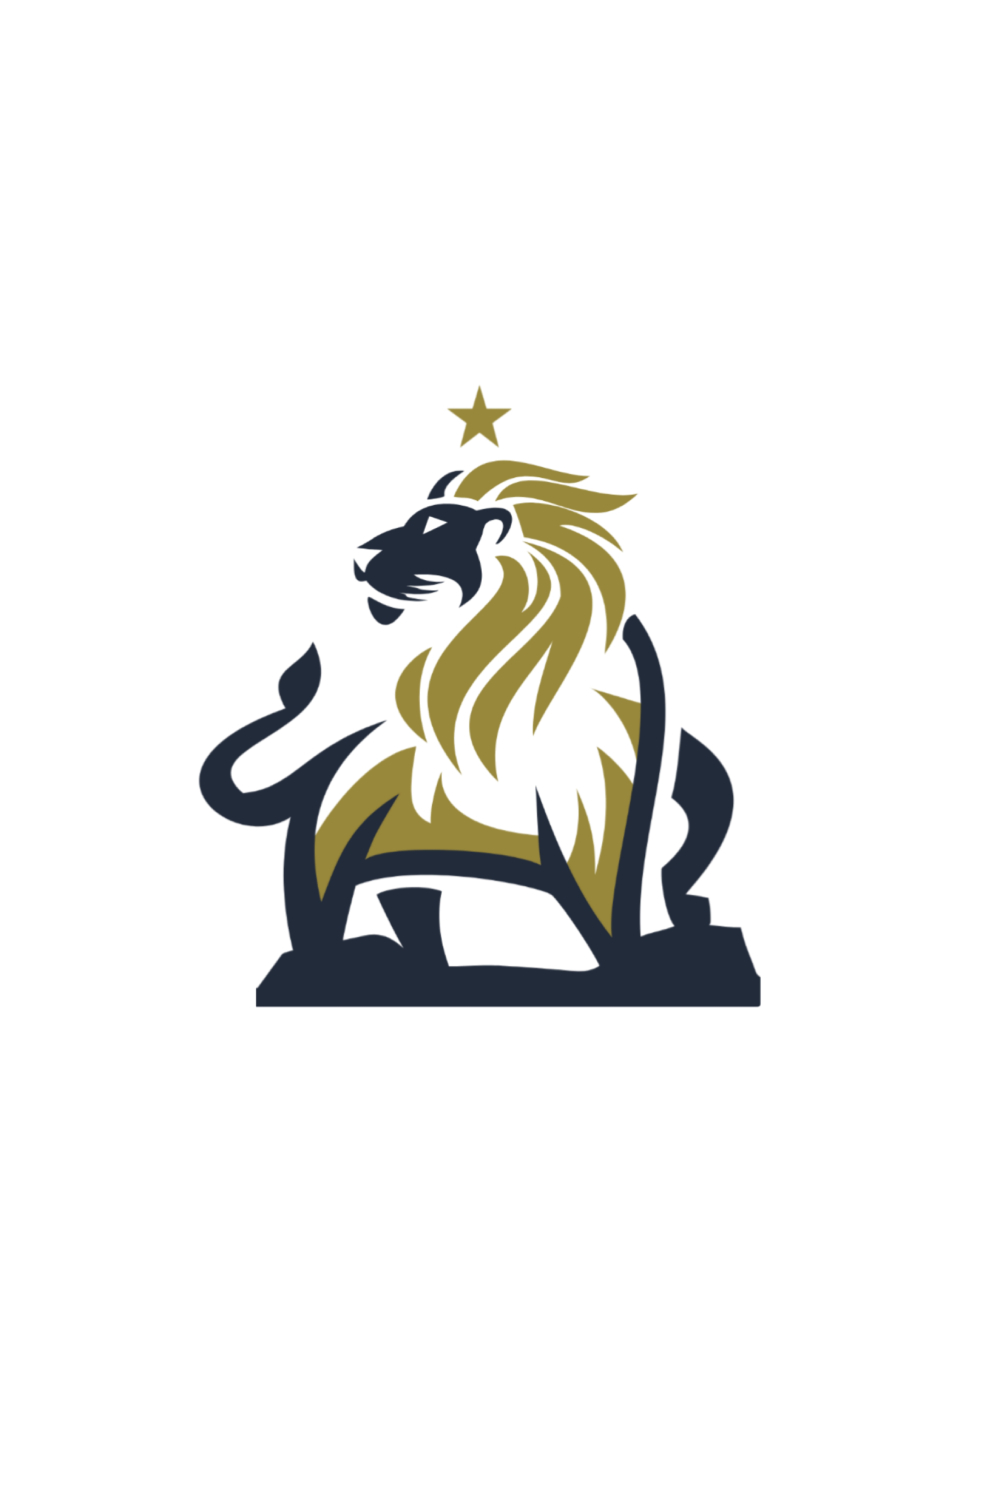 Lion Star Logo Design pinterest image.